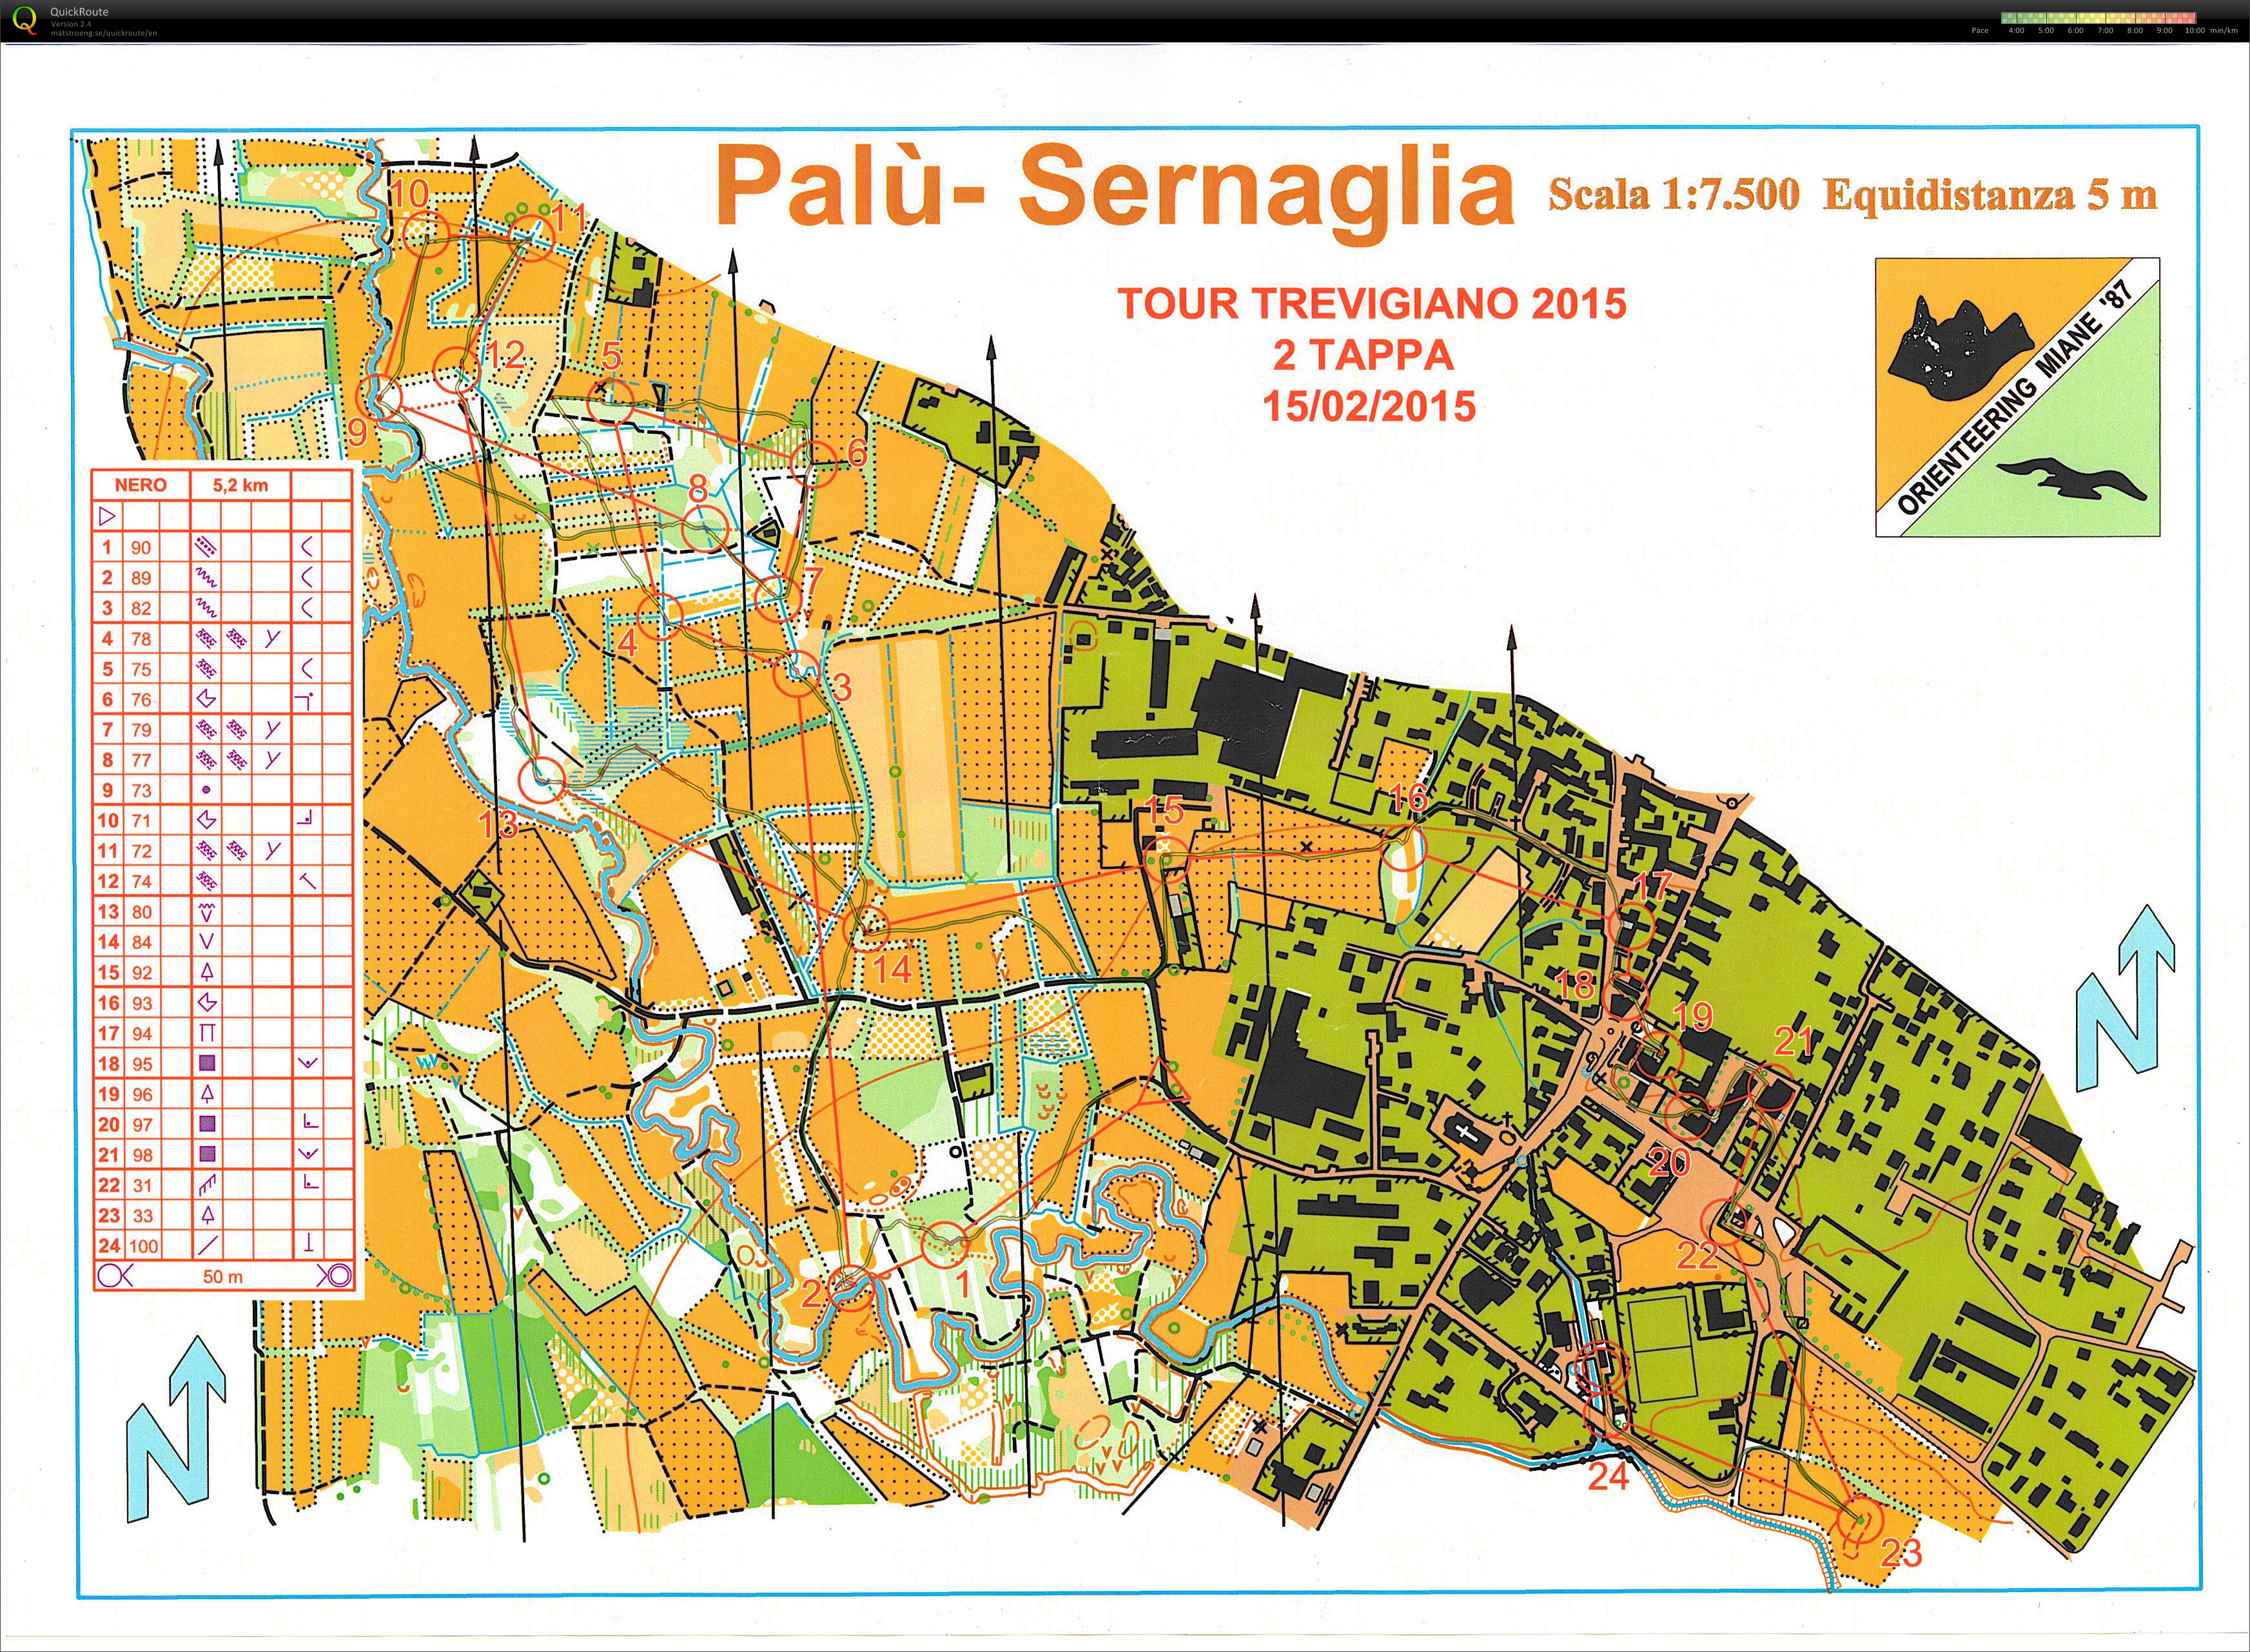 2a prova Tour Trevigiano 2015 (15/02/2015)